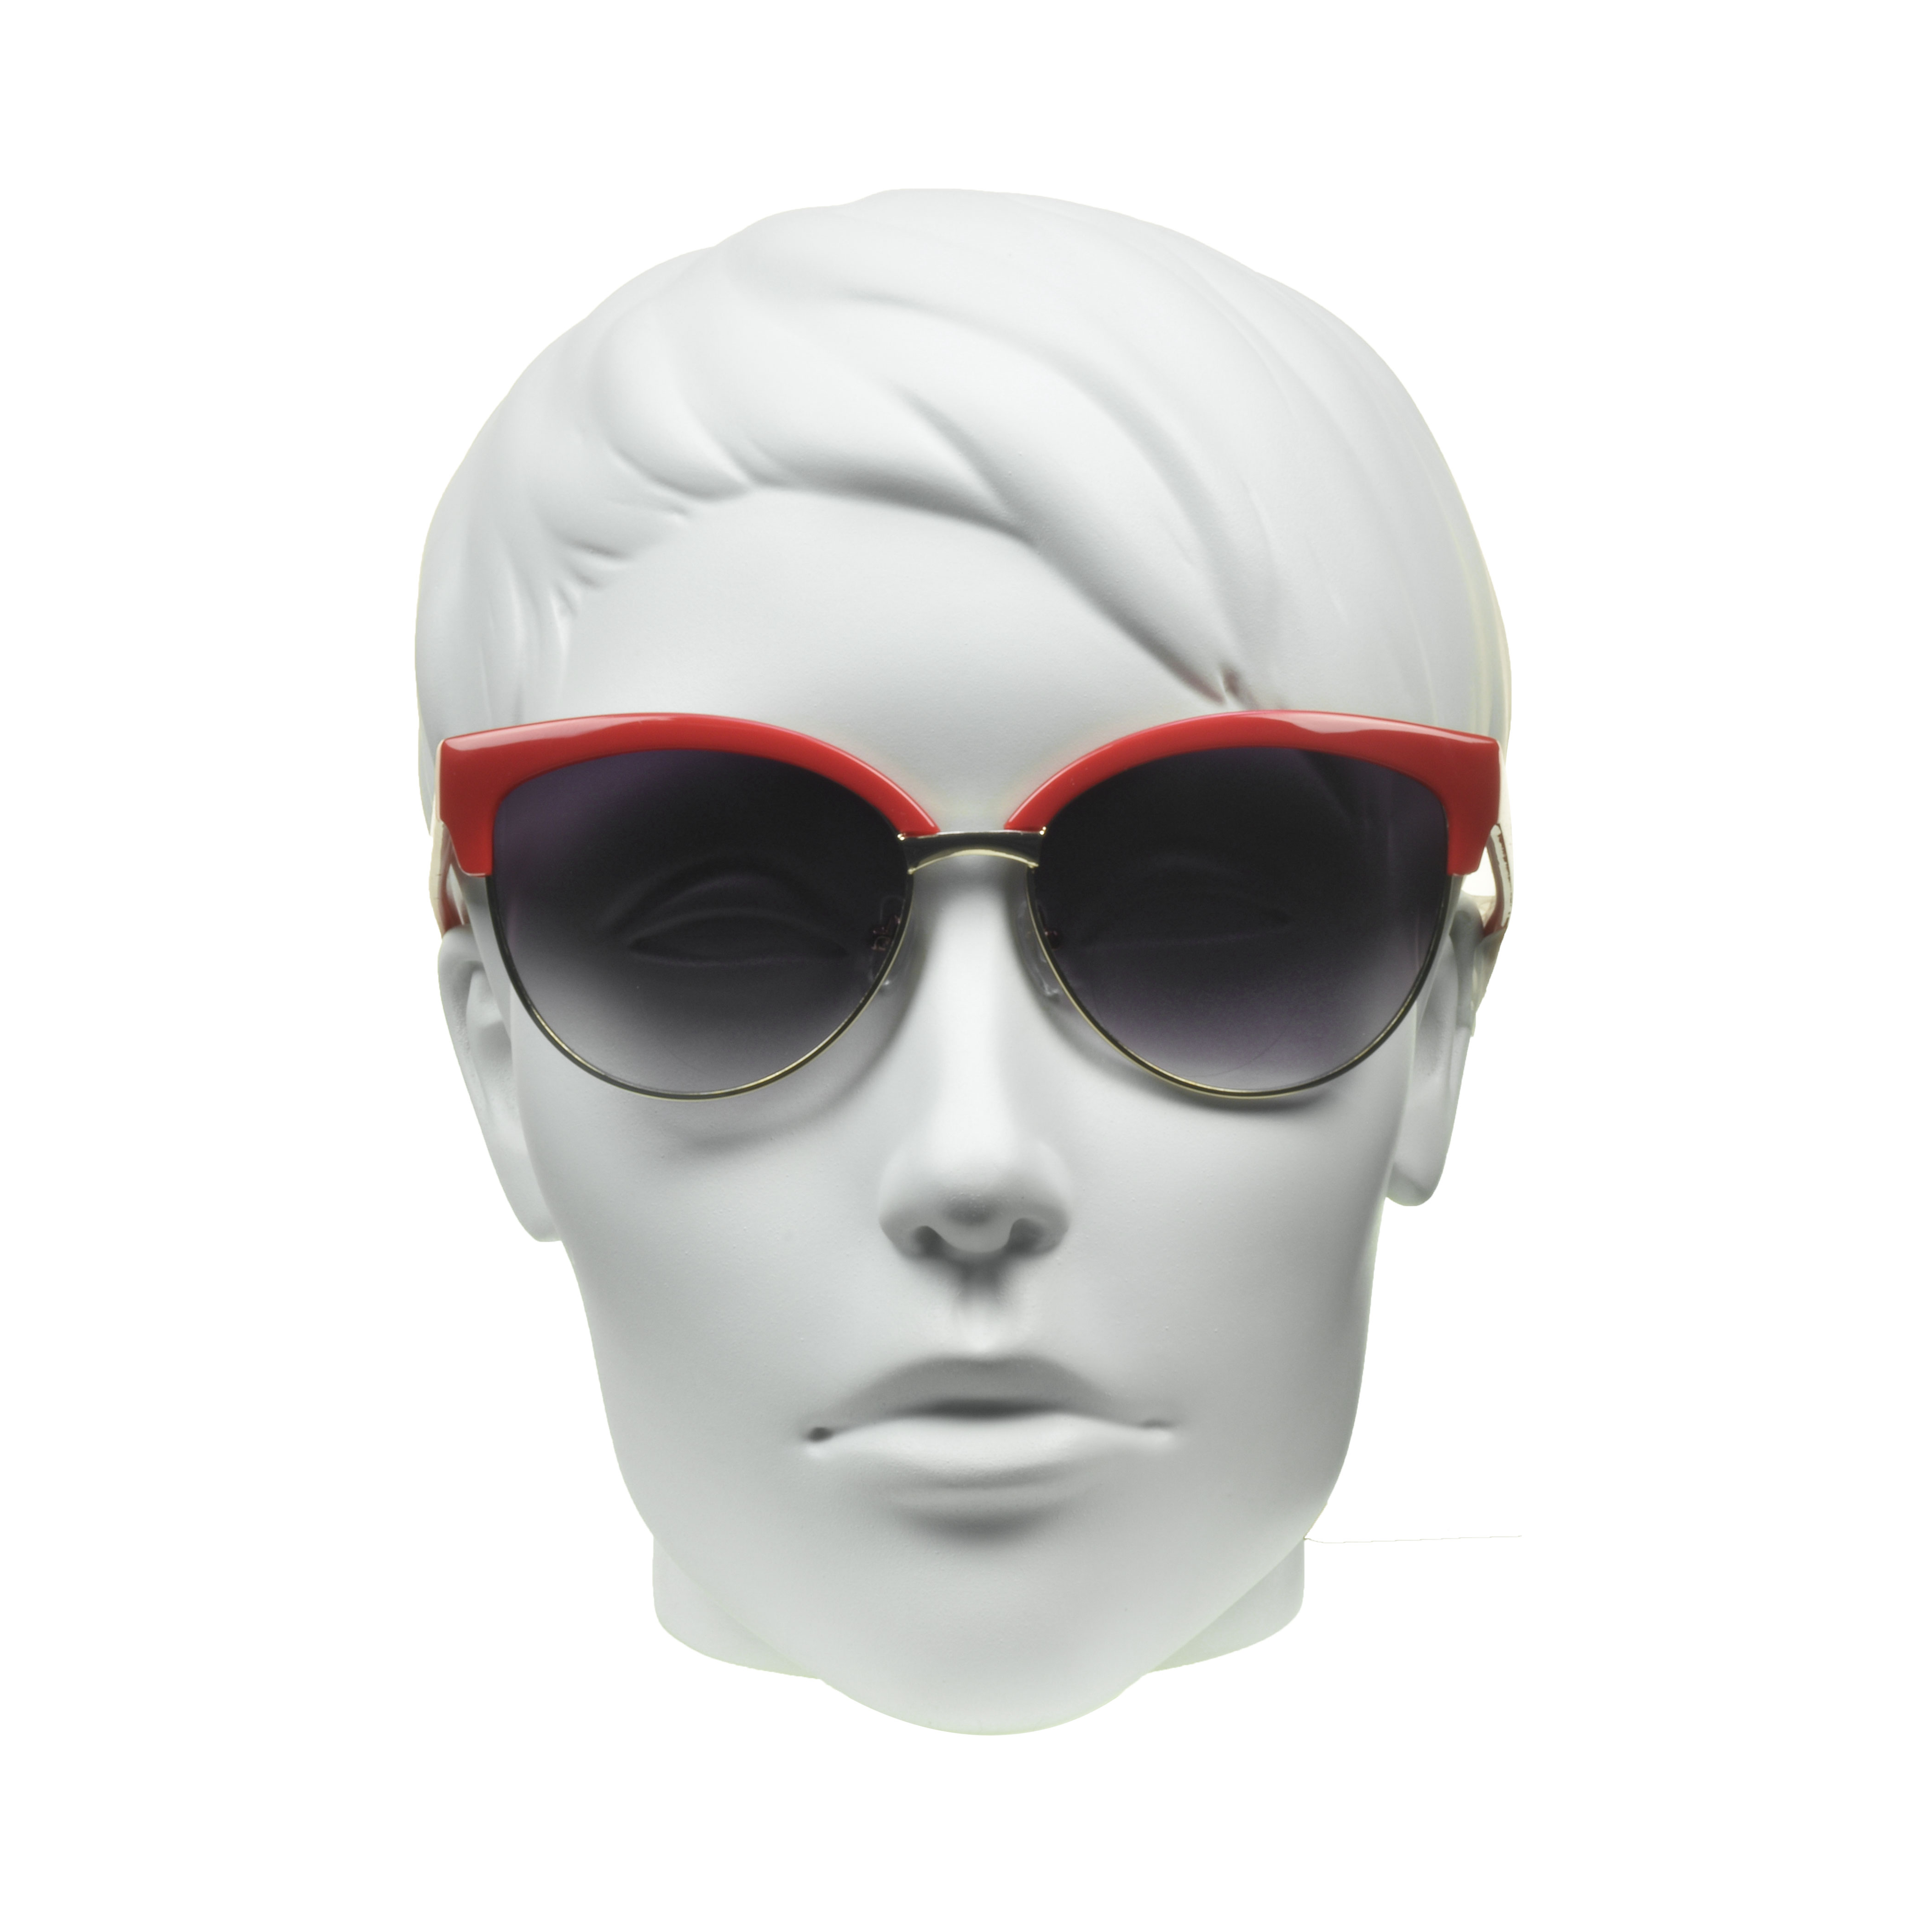 proSPORT Women Bifocal Reading Cateye Fashion Horn Rim Sunglasses Red Gold Frame Smoke Lens +2.00 - image 3 of 5